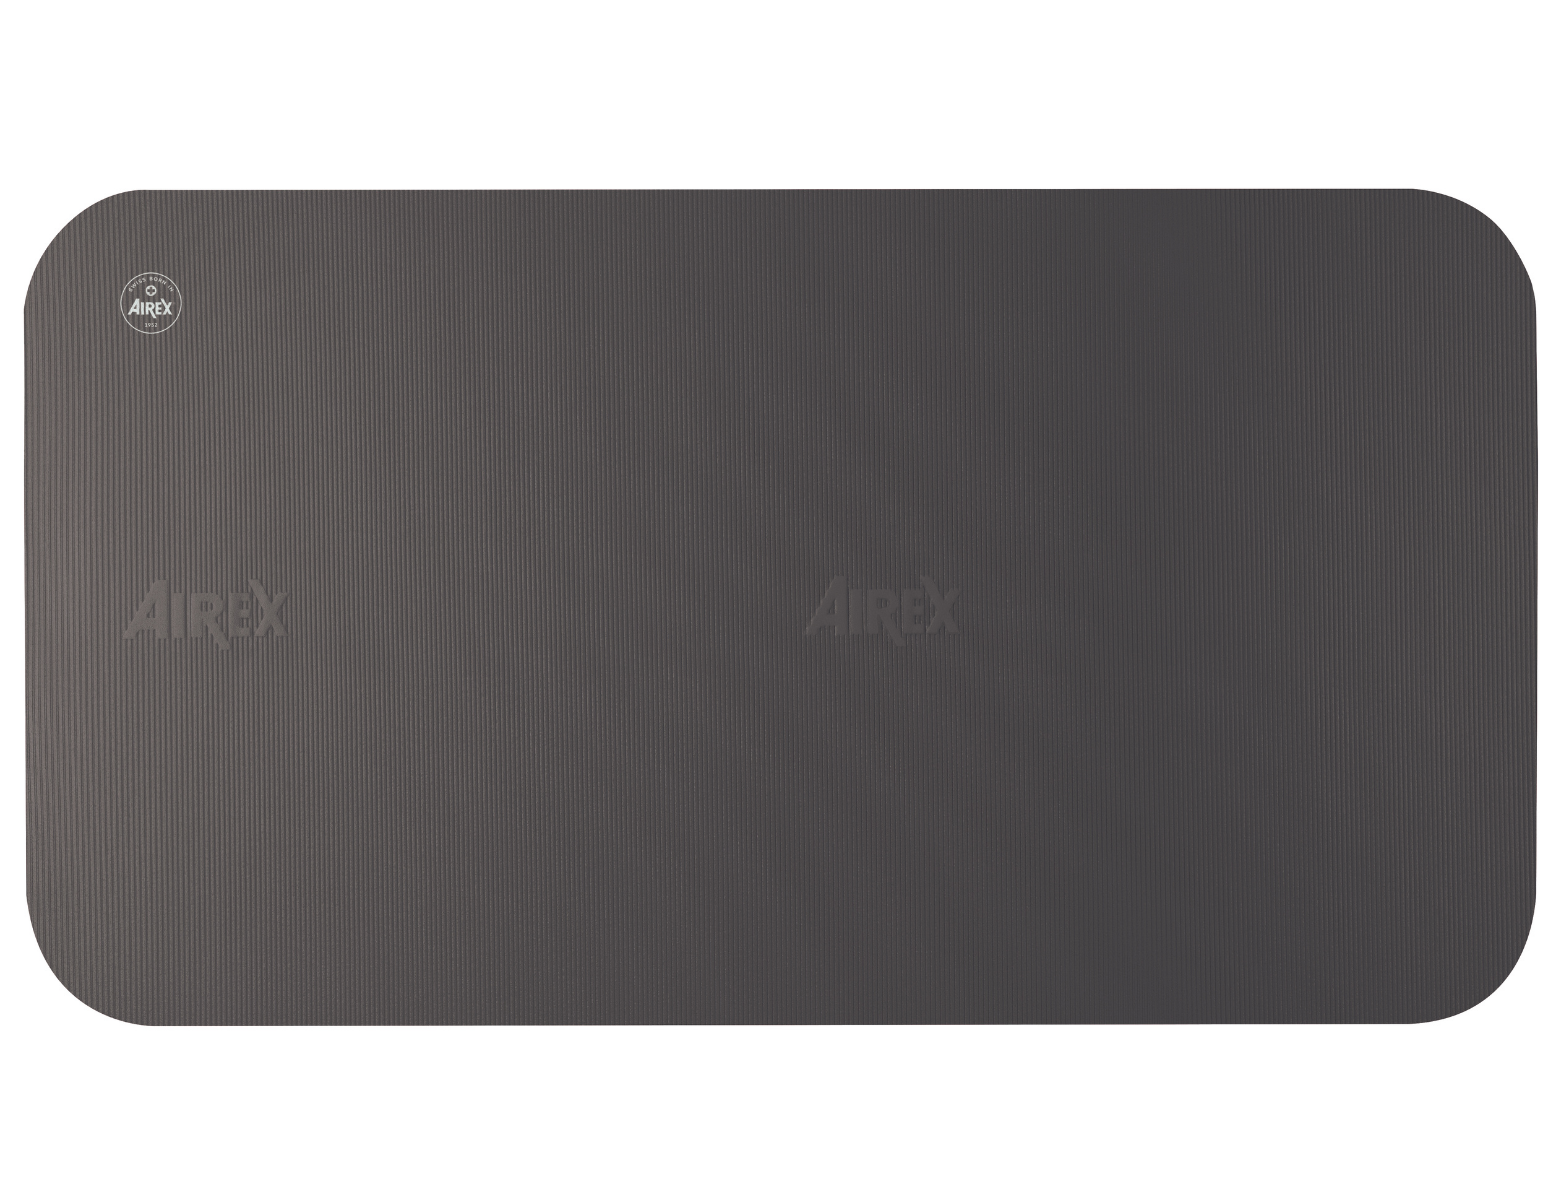 Airex tapis Corona - 200 x 100 x 1,5 cm - gris foncé